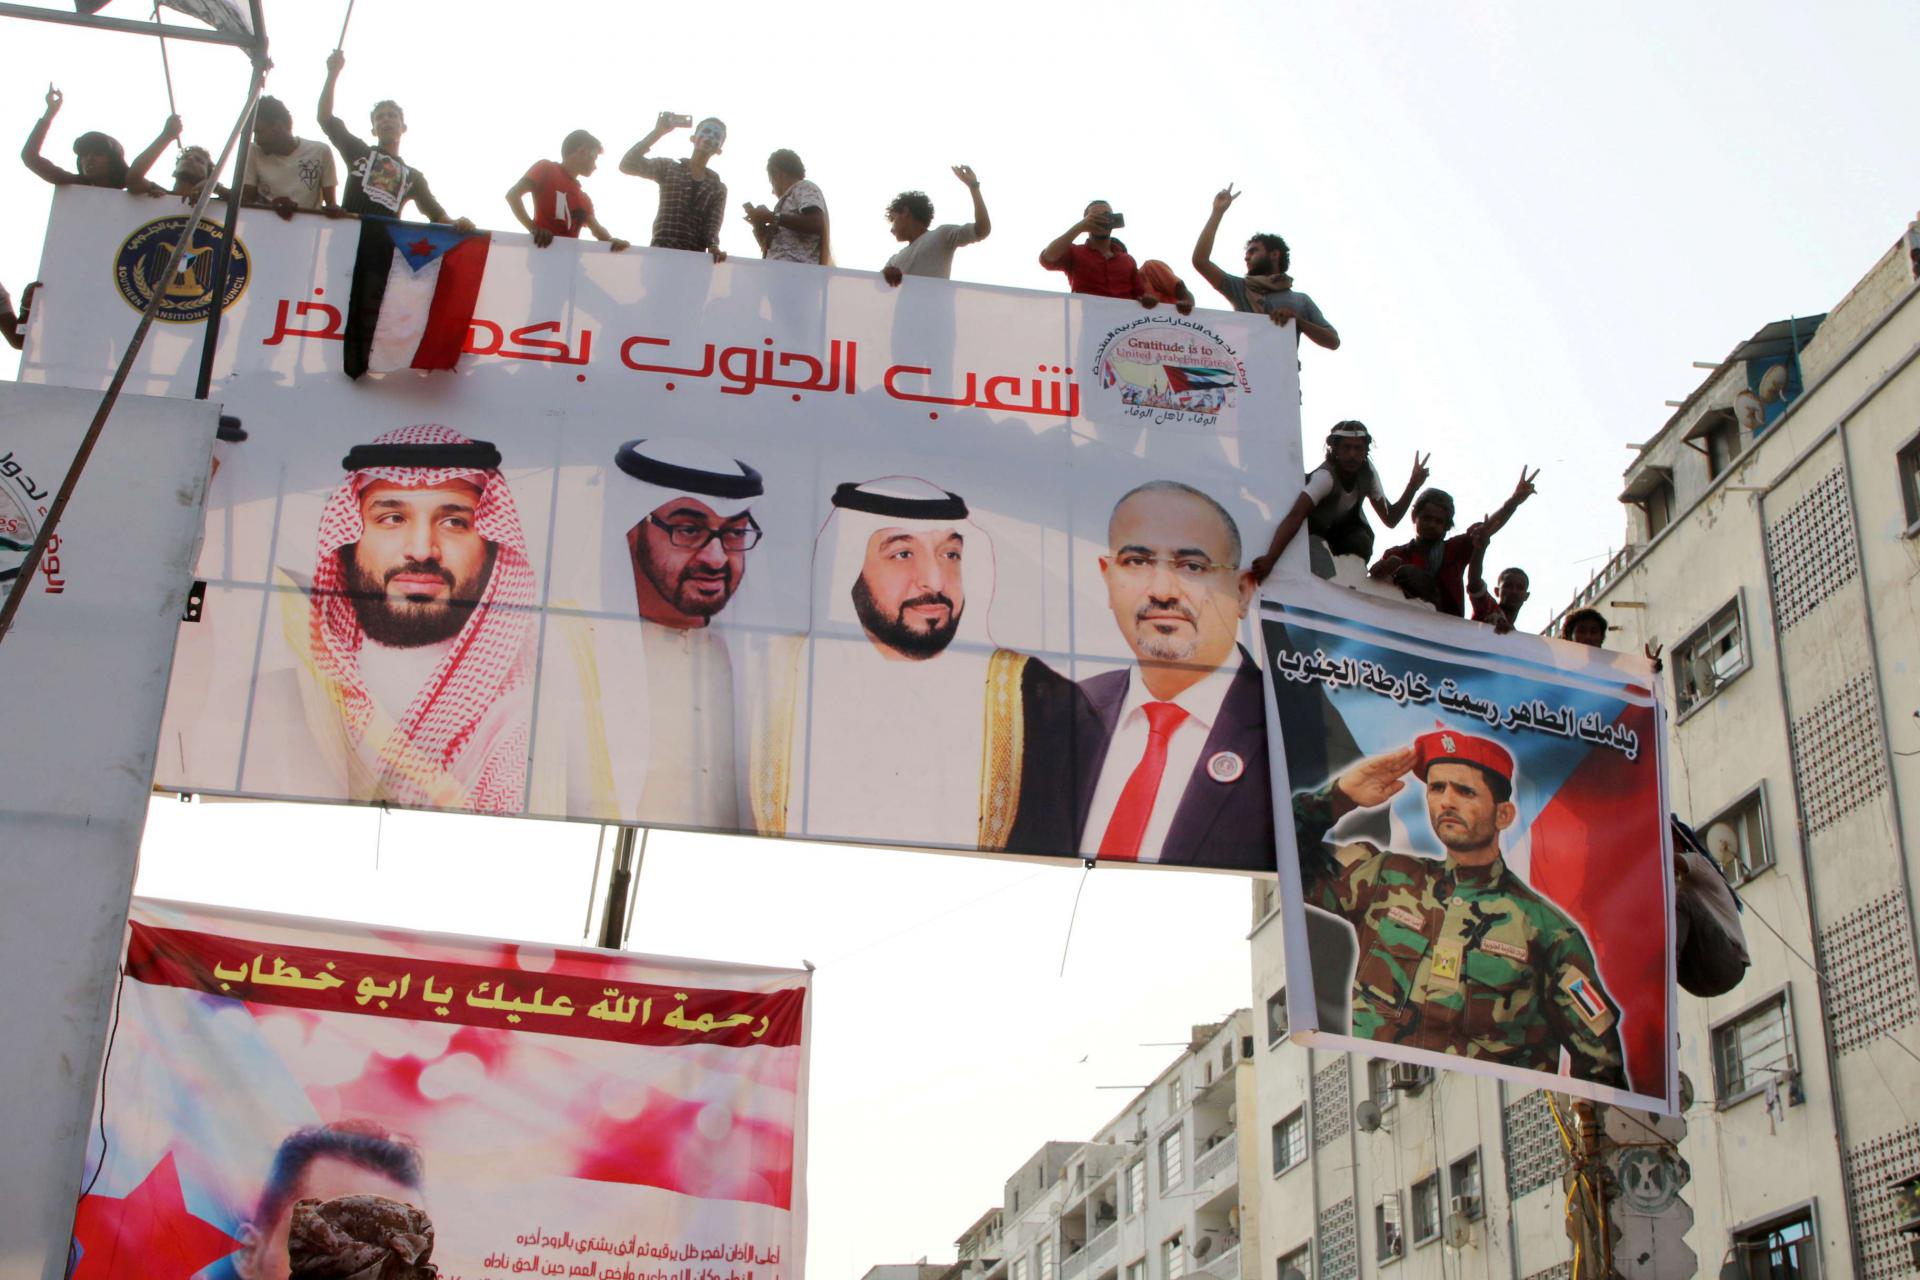 Hadi's government has asked Abu Dhabi, Saudi Arabia's main coalition partner, to stop arming separatists